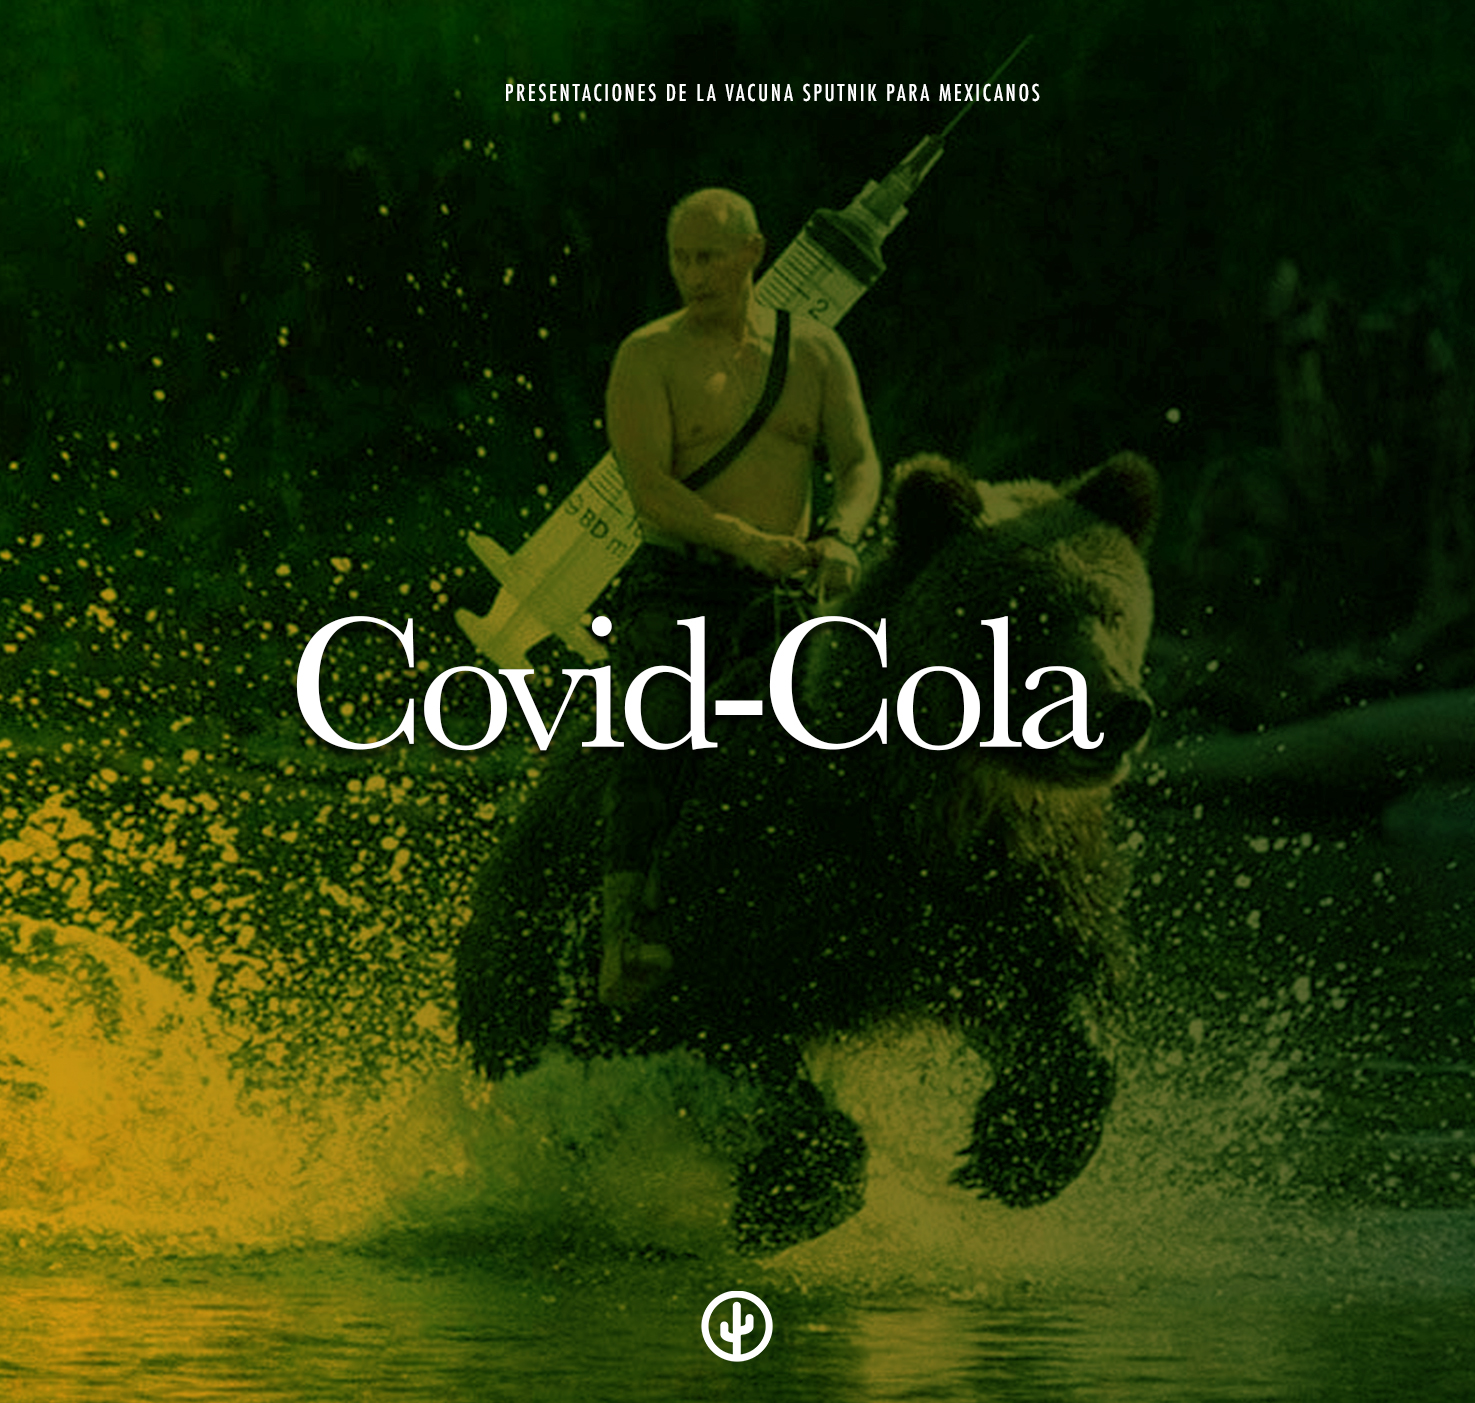 Vacuna Covid-Cola